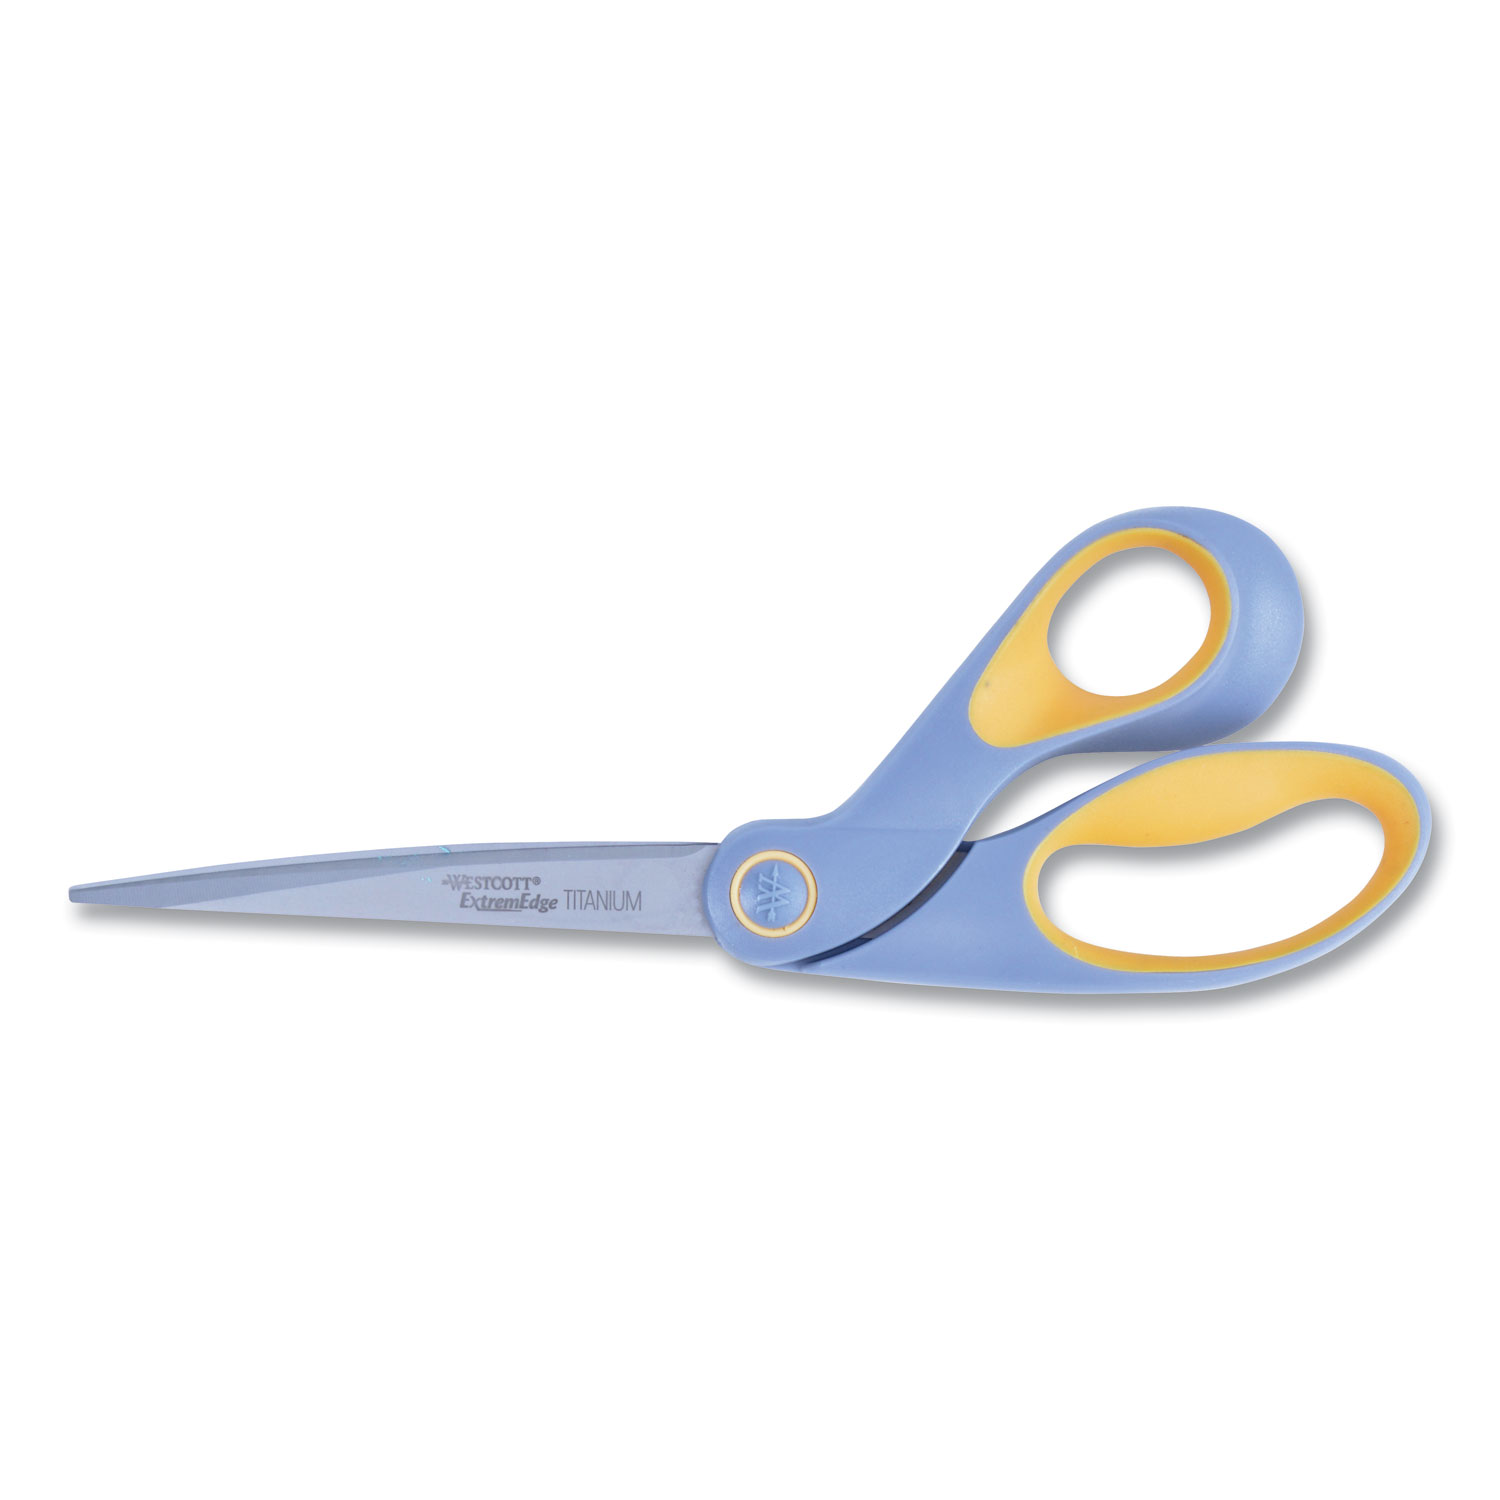 Westcott Titanium Bonded Scissors, 8 Long, 3.5 Cut Length, Gray/Yellow Straight Handle (ACM13529)